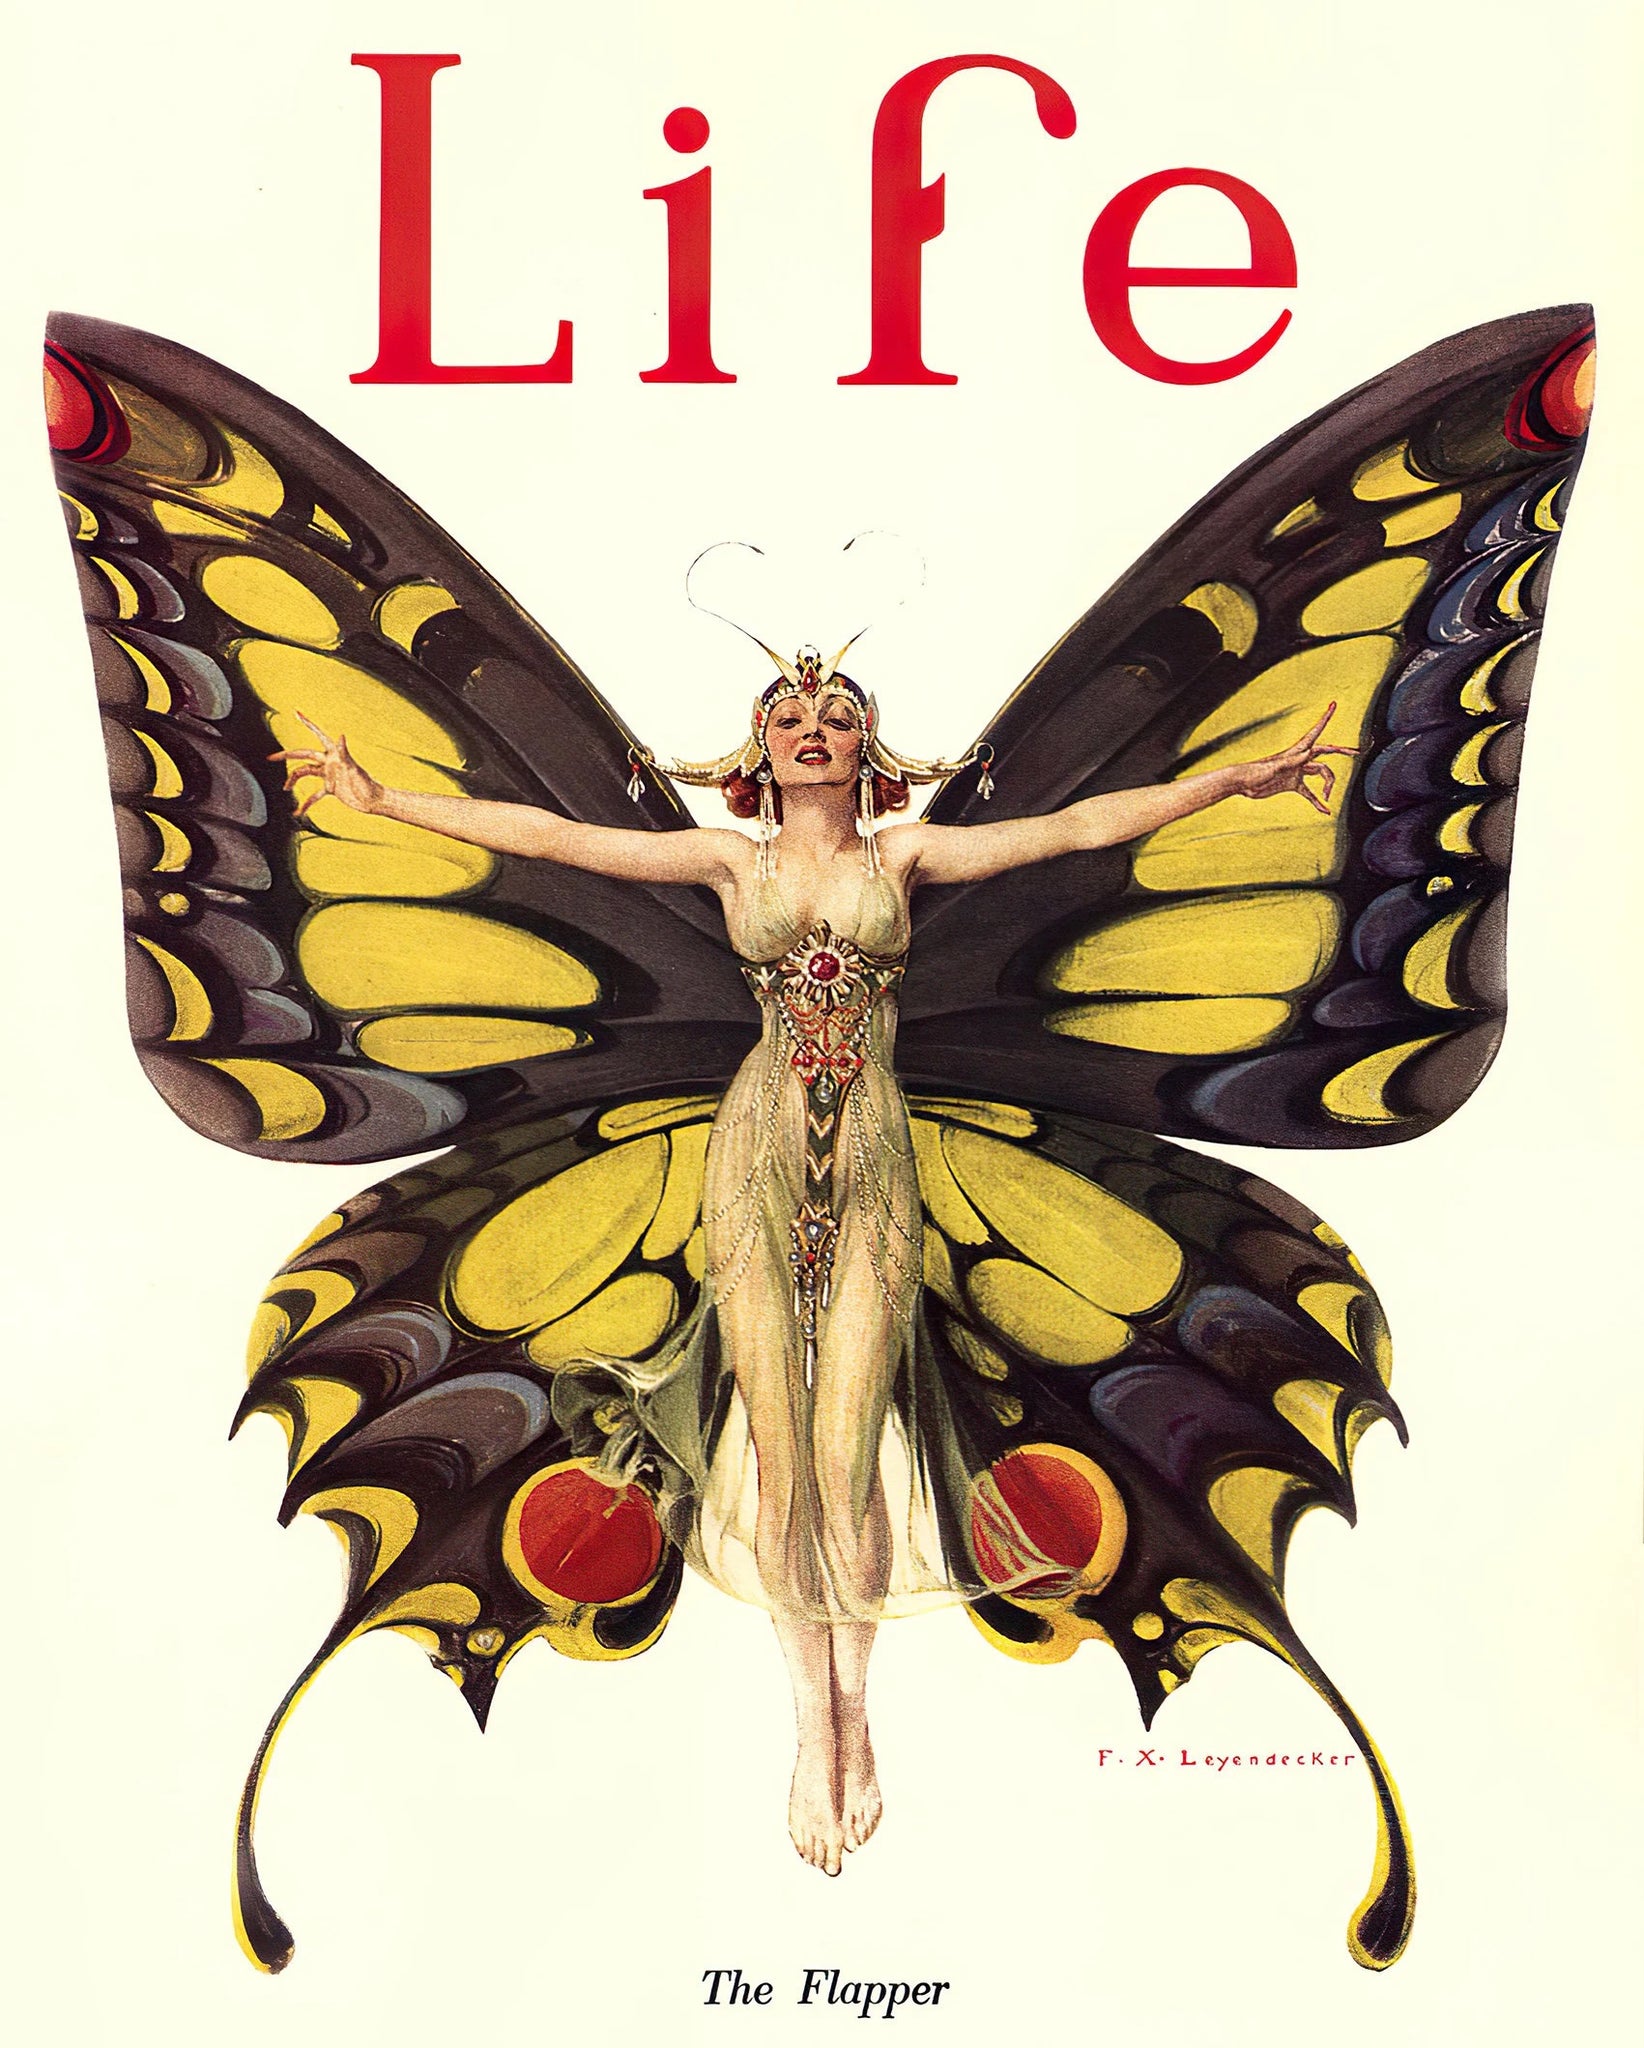 F.X. Leyendecker - The Flapper, Life Magazine Cover (1922) - 17" x 22" Art Print